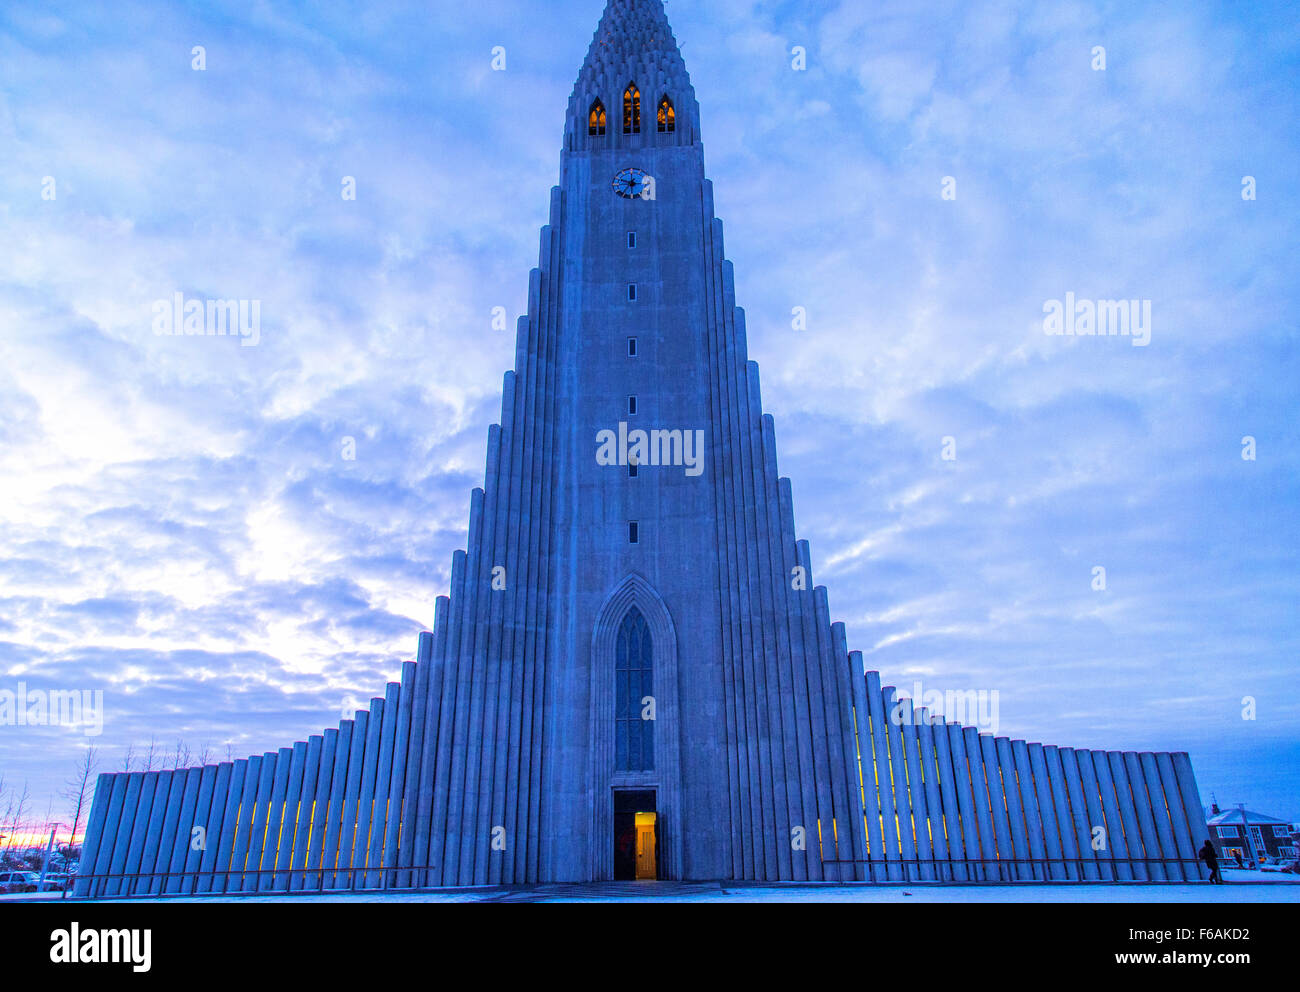 Hallgrimskirkja Church in Reykjavik, Iceland Stock Photo